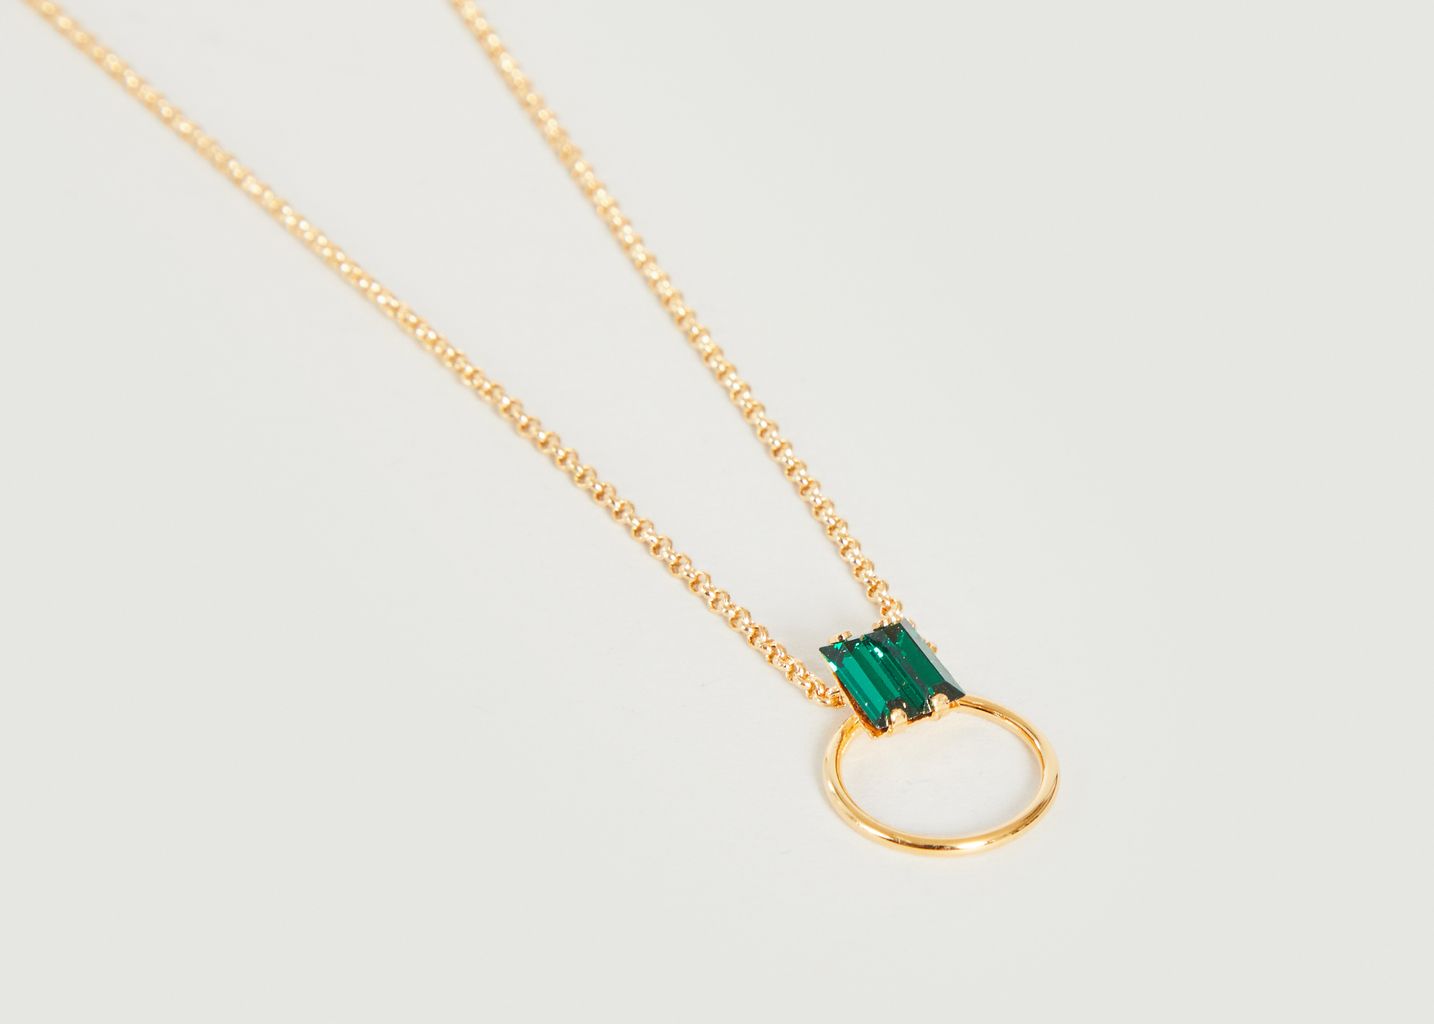 Thin necklace with Swarovski crystals pendant Zazie - Medecine Douce